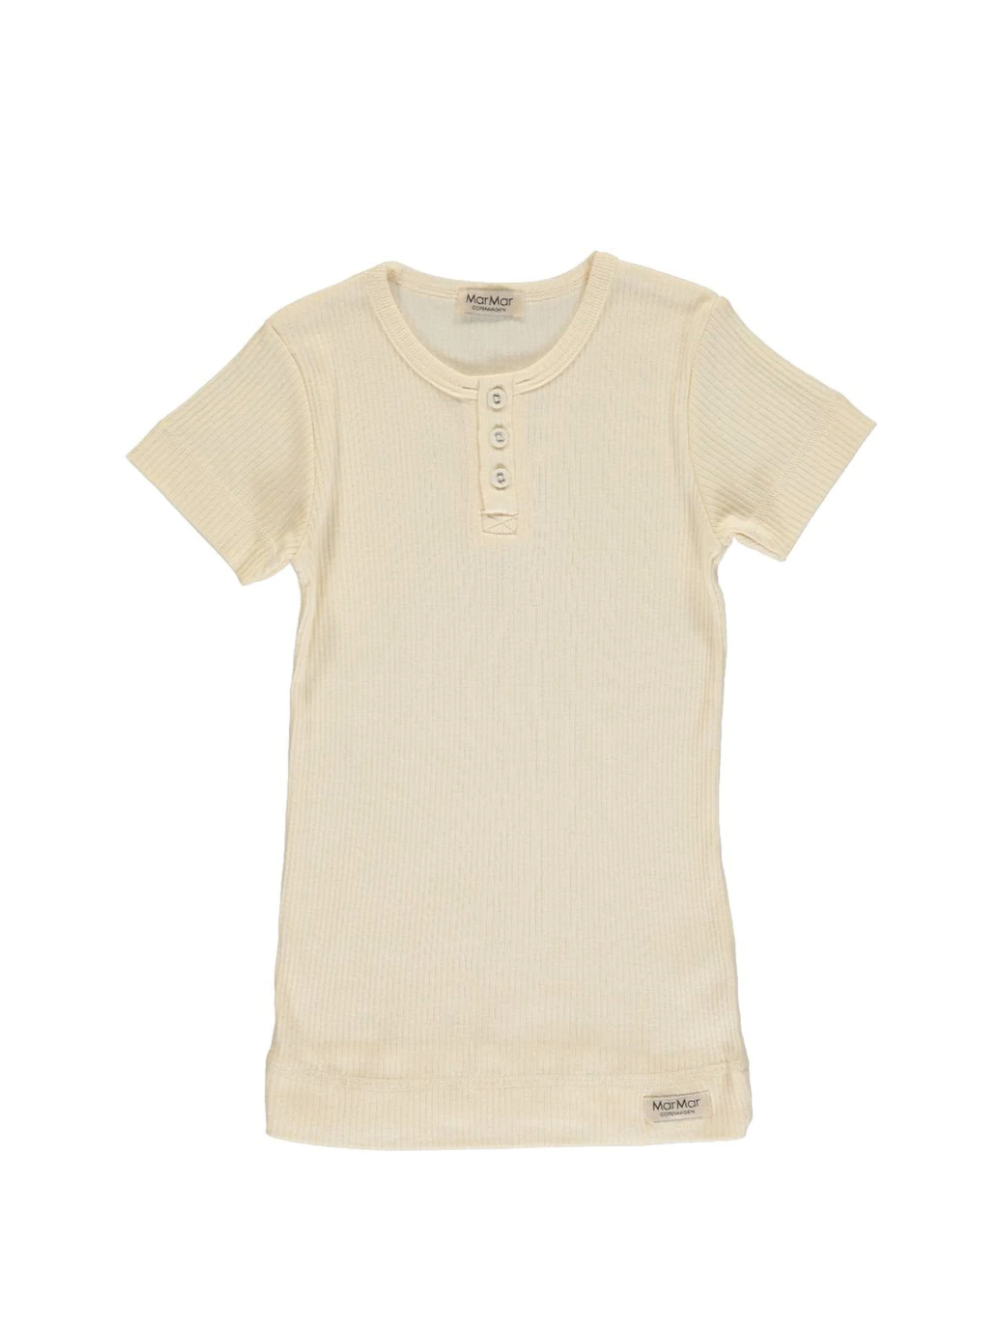 MarMar Tee SS, T-shirt - Off White